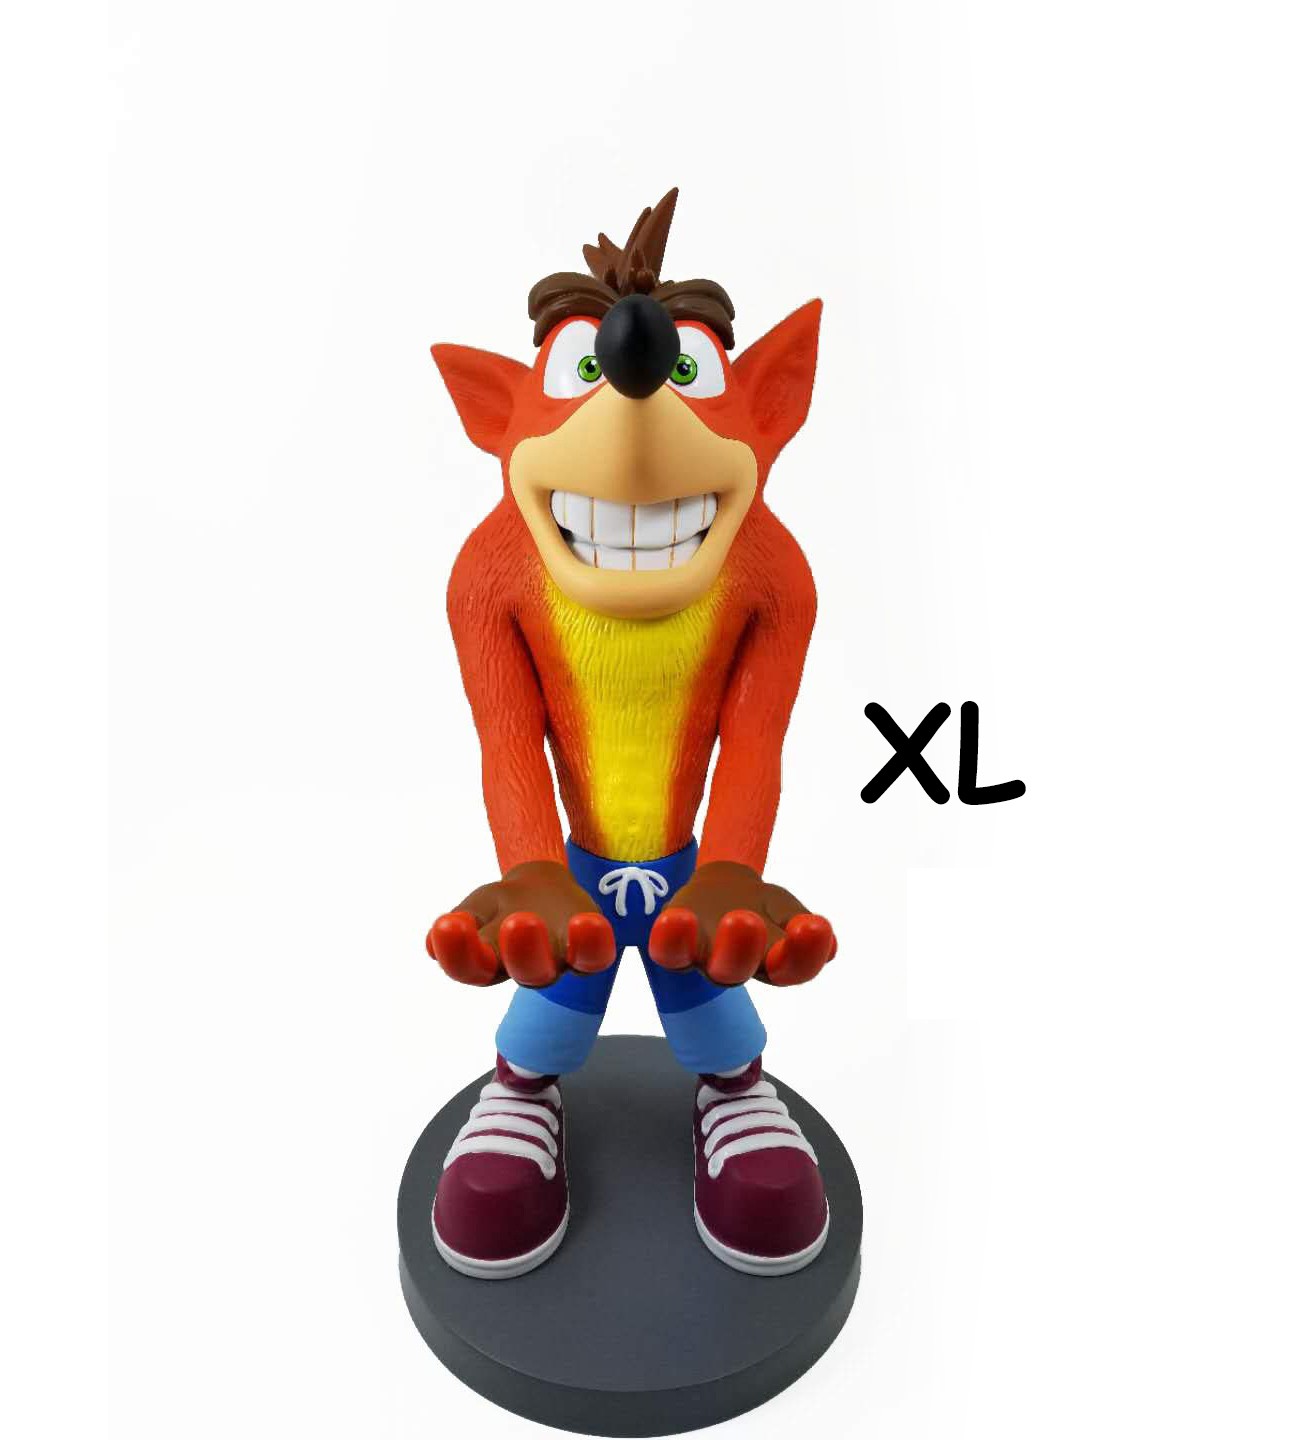 Crash Bandicoot Cable Guy (XL) stand